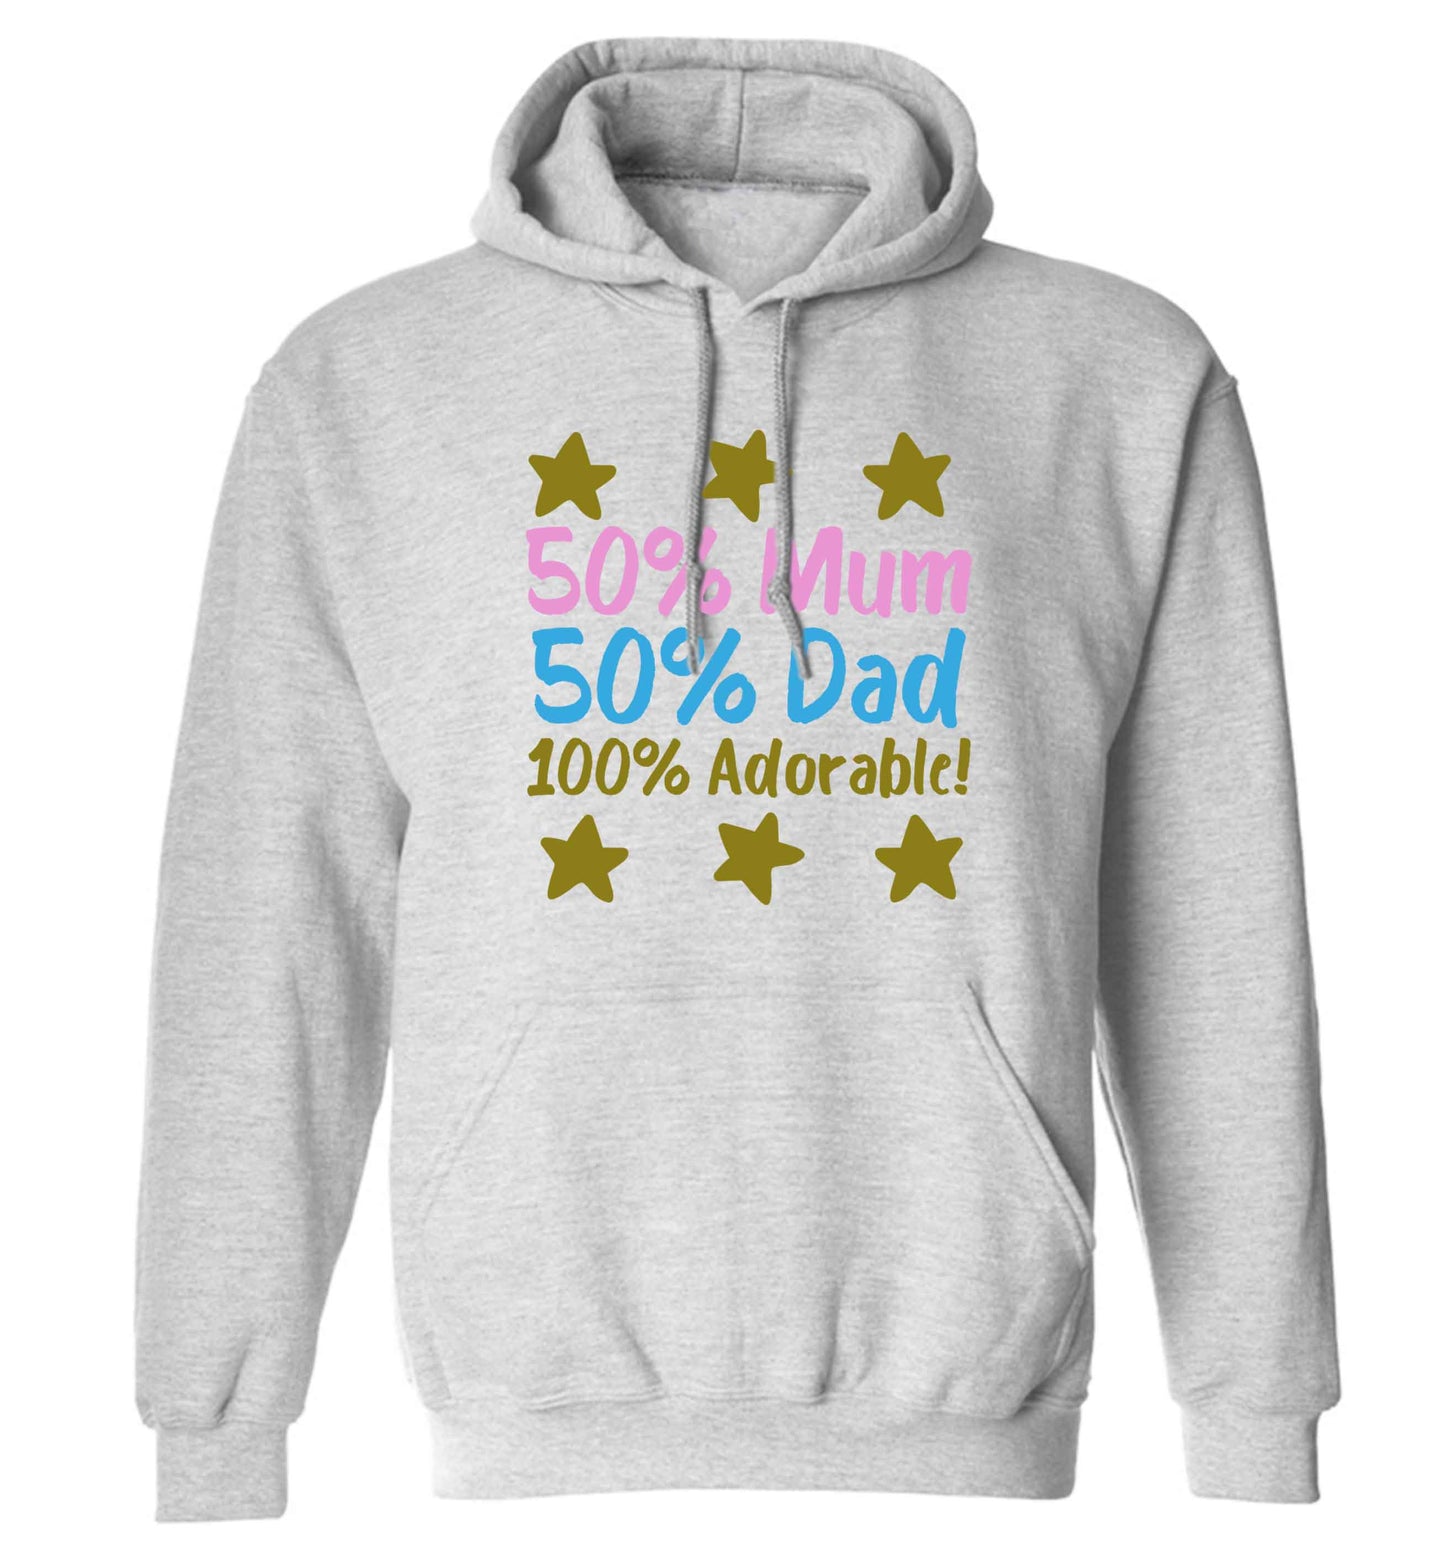 50% mum 50% dad 100% adorable adults unisex grey hoodie 2XL